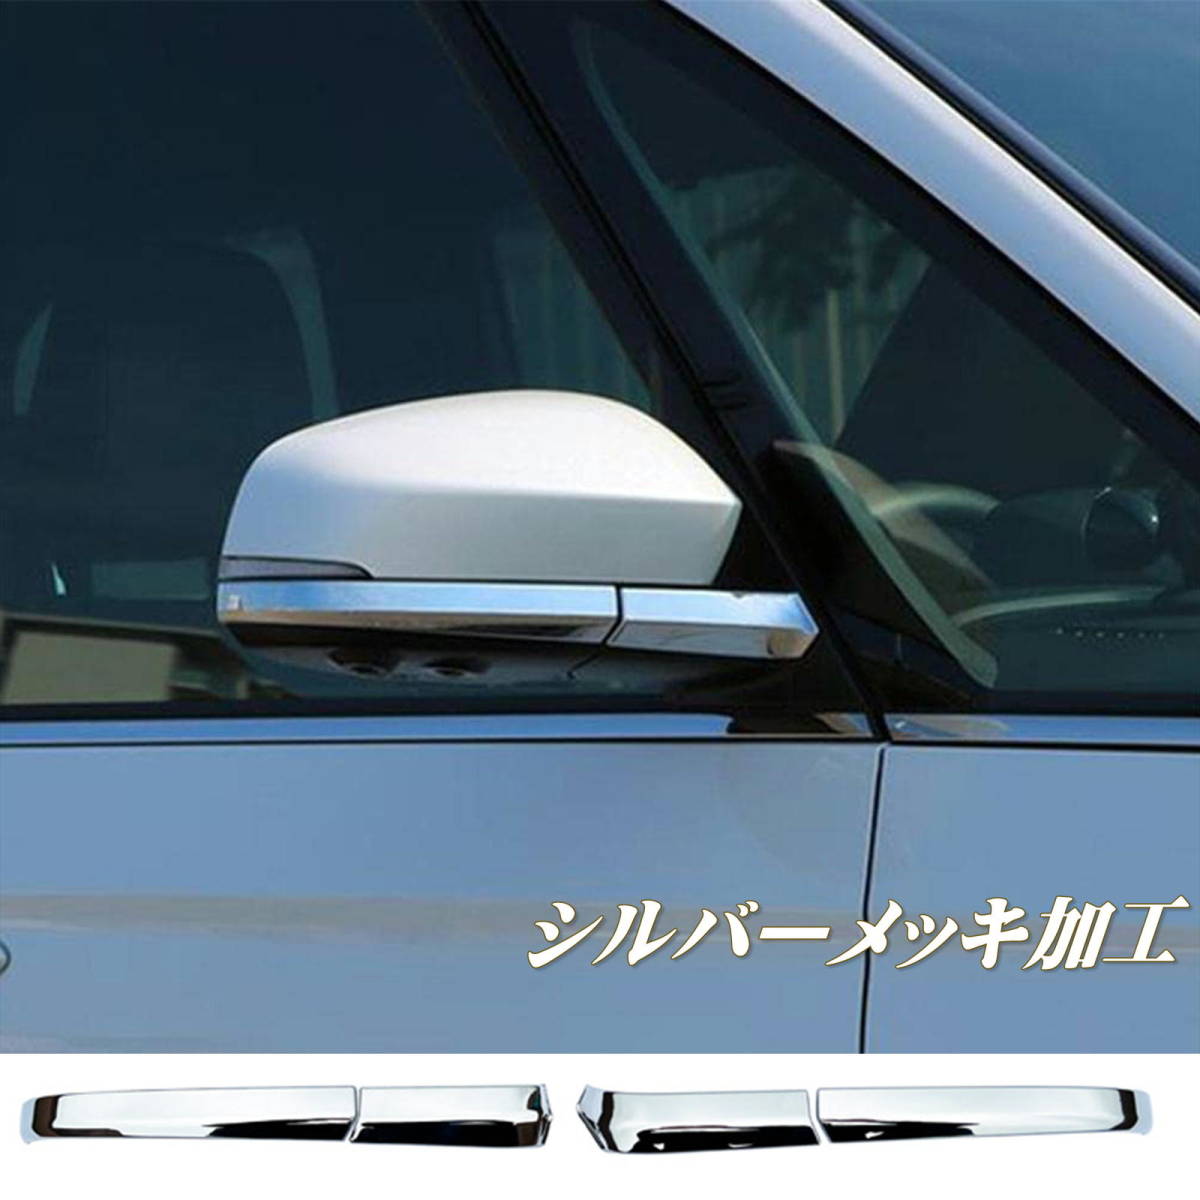  Toyota new model Voxy 90 series door mirror garnish special design silver plating finishing Voxy Noah 